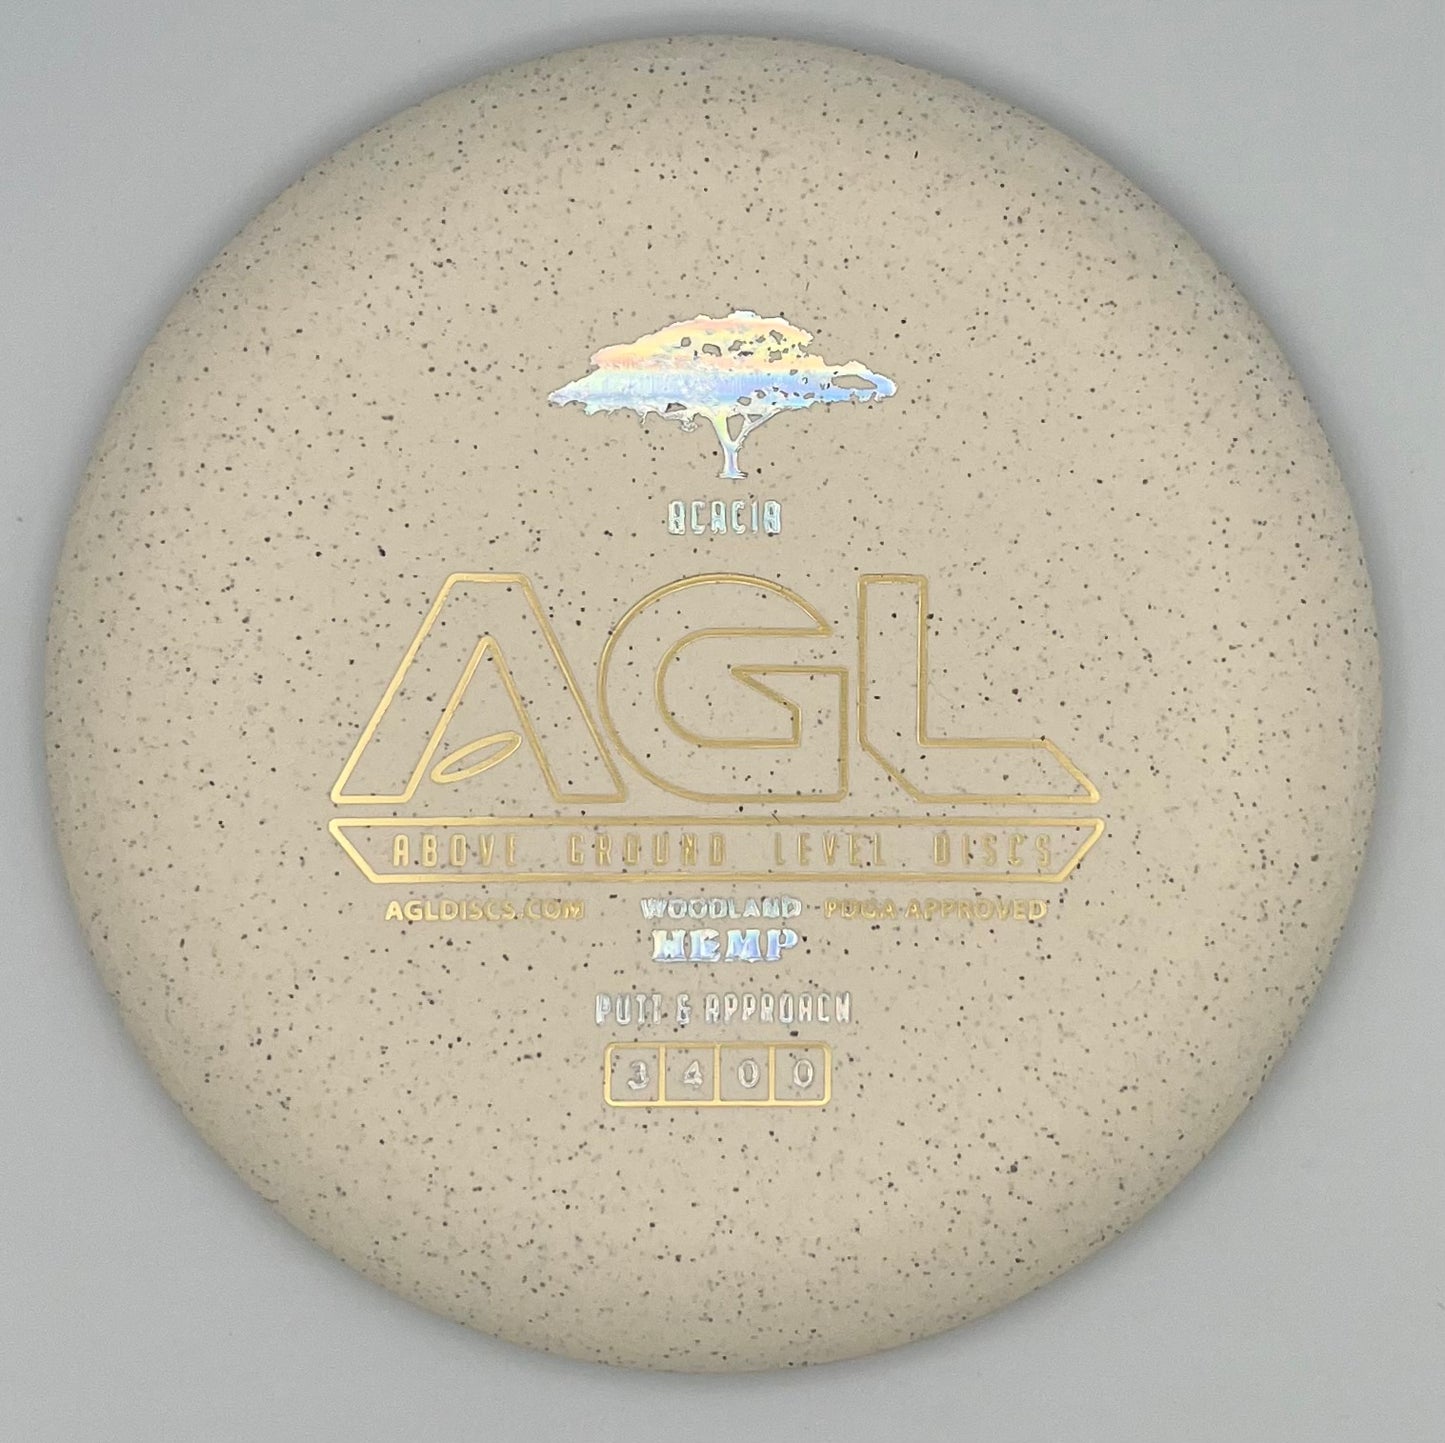 AGL Discs - Cookies and Cream Woodland Hemp Acacia (AGL Bar Stamp)